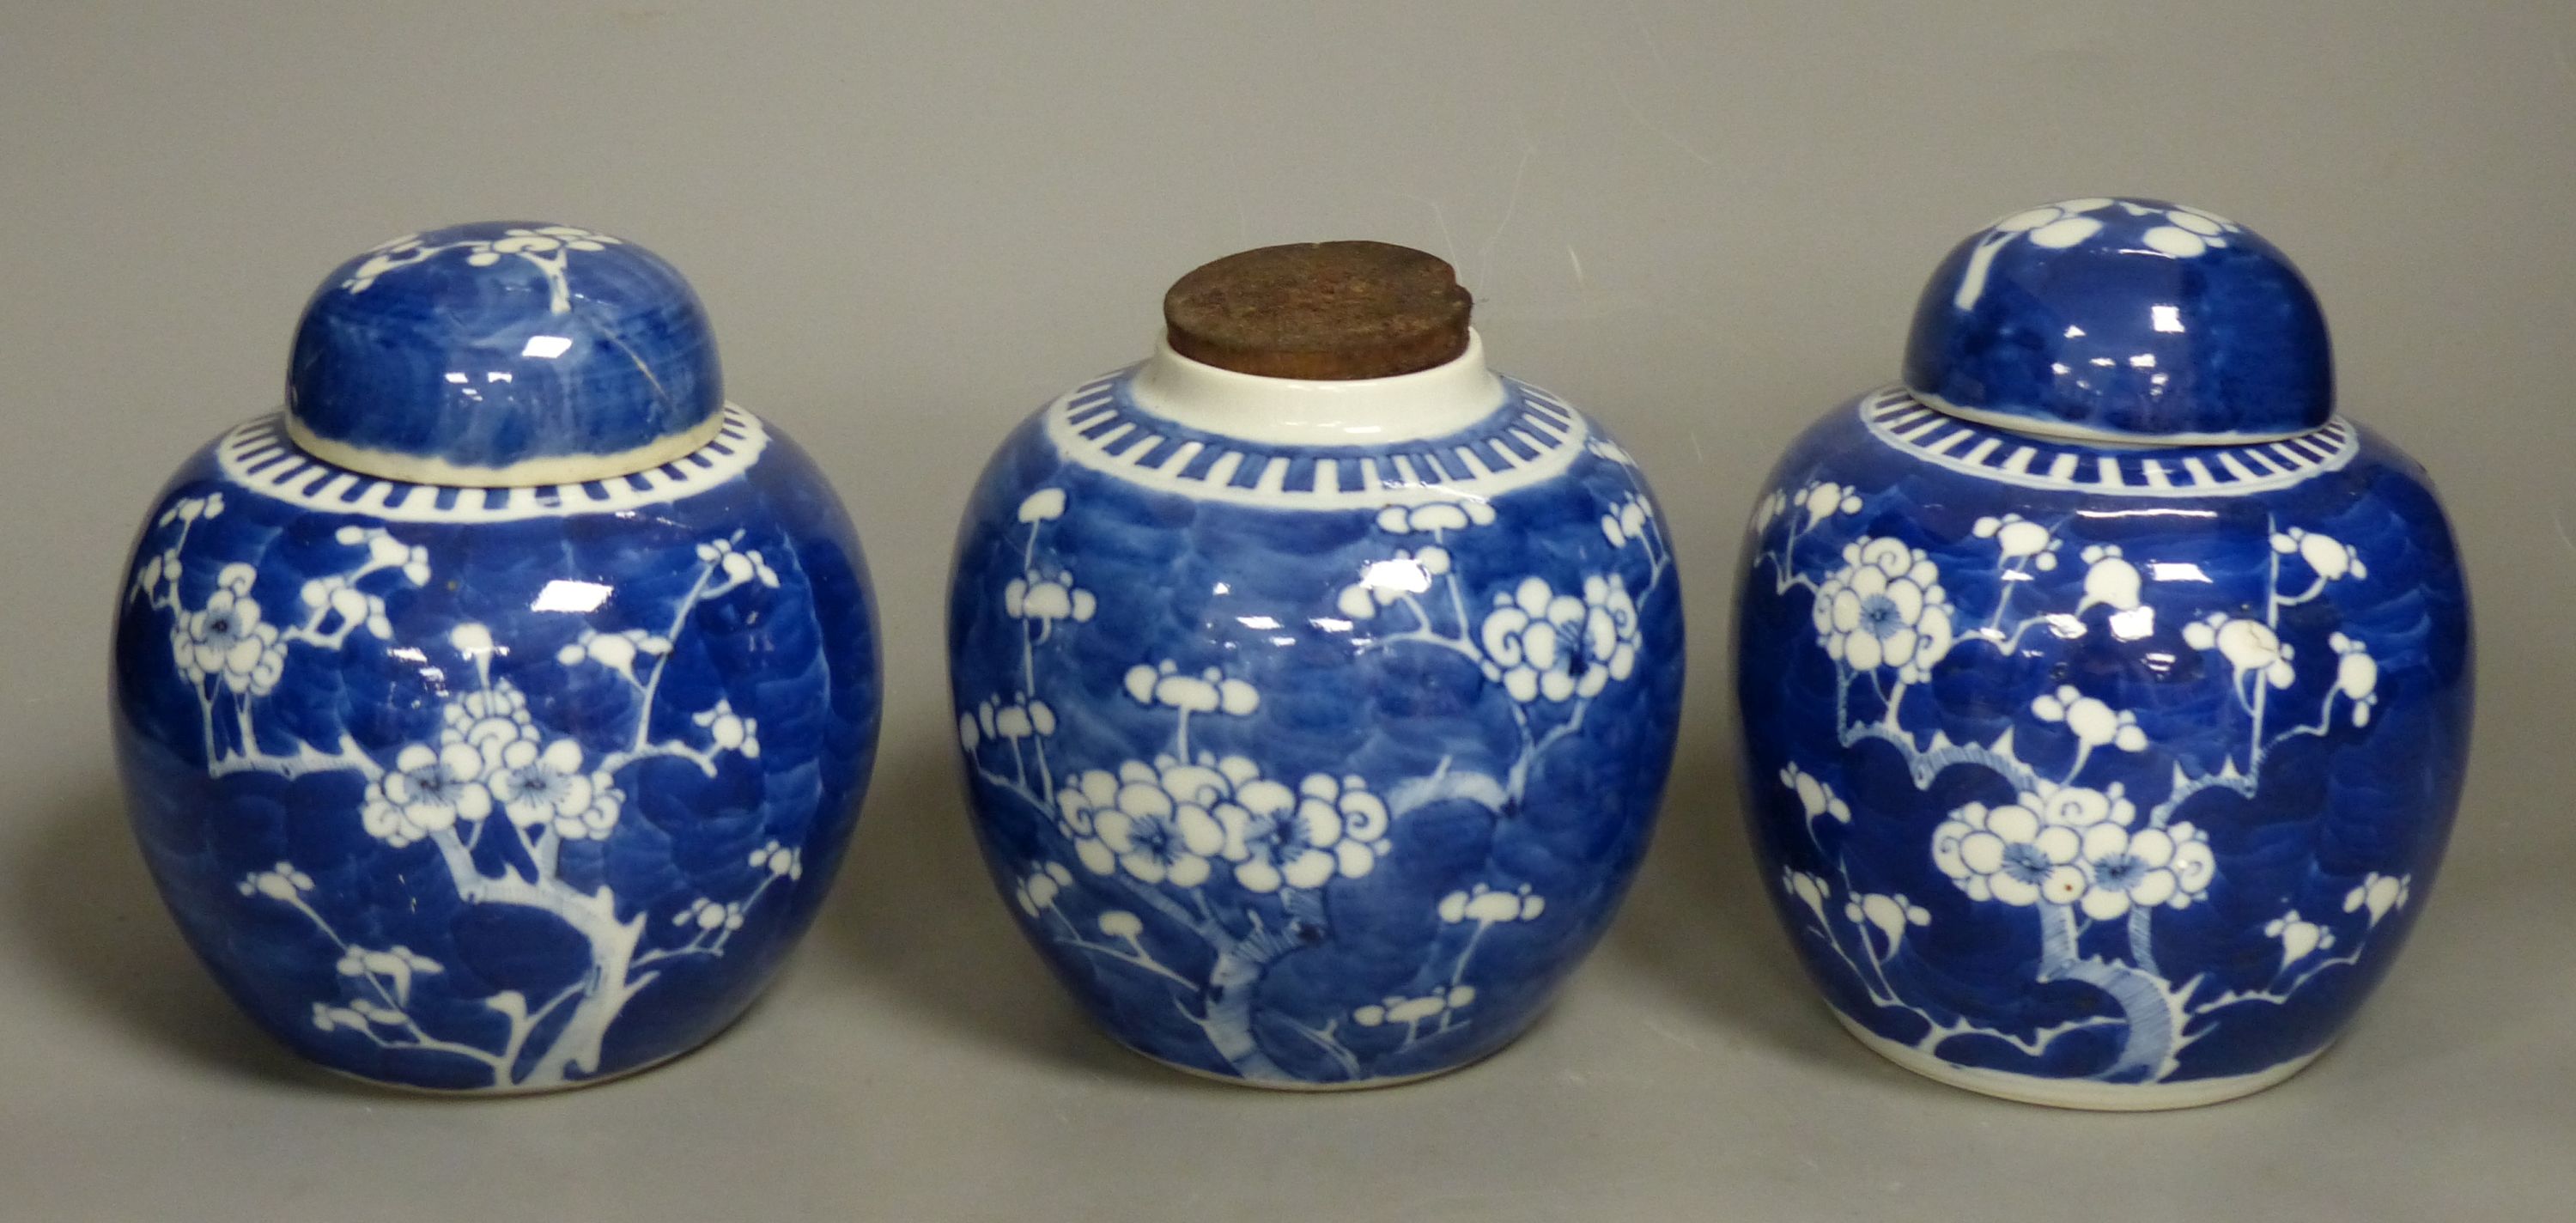 Three Chinese blue and white prunus jars, late 19th century/early 20th century